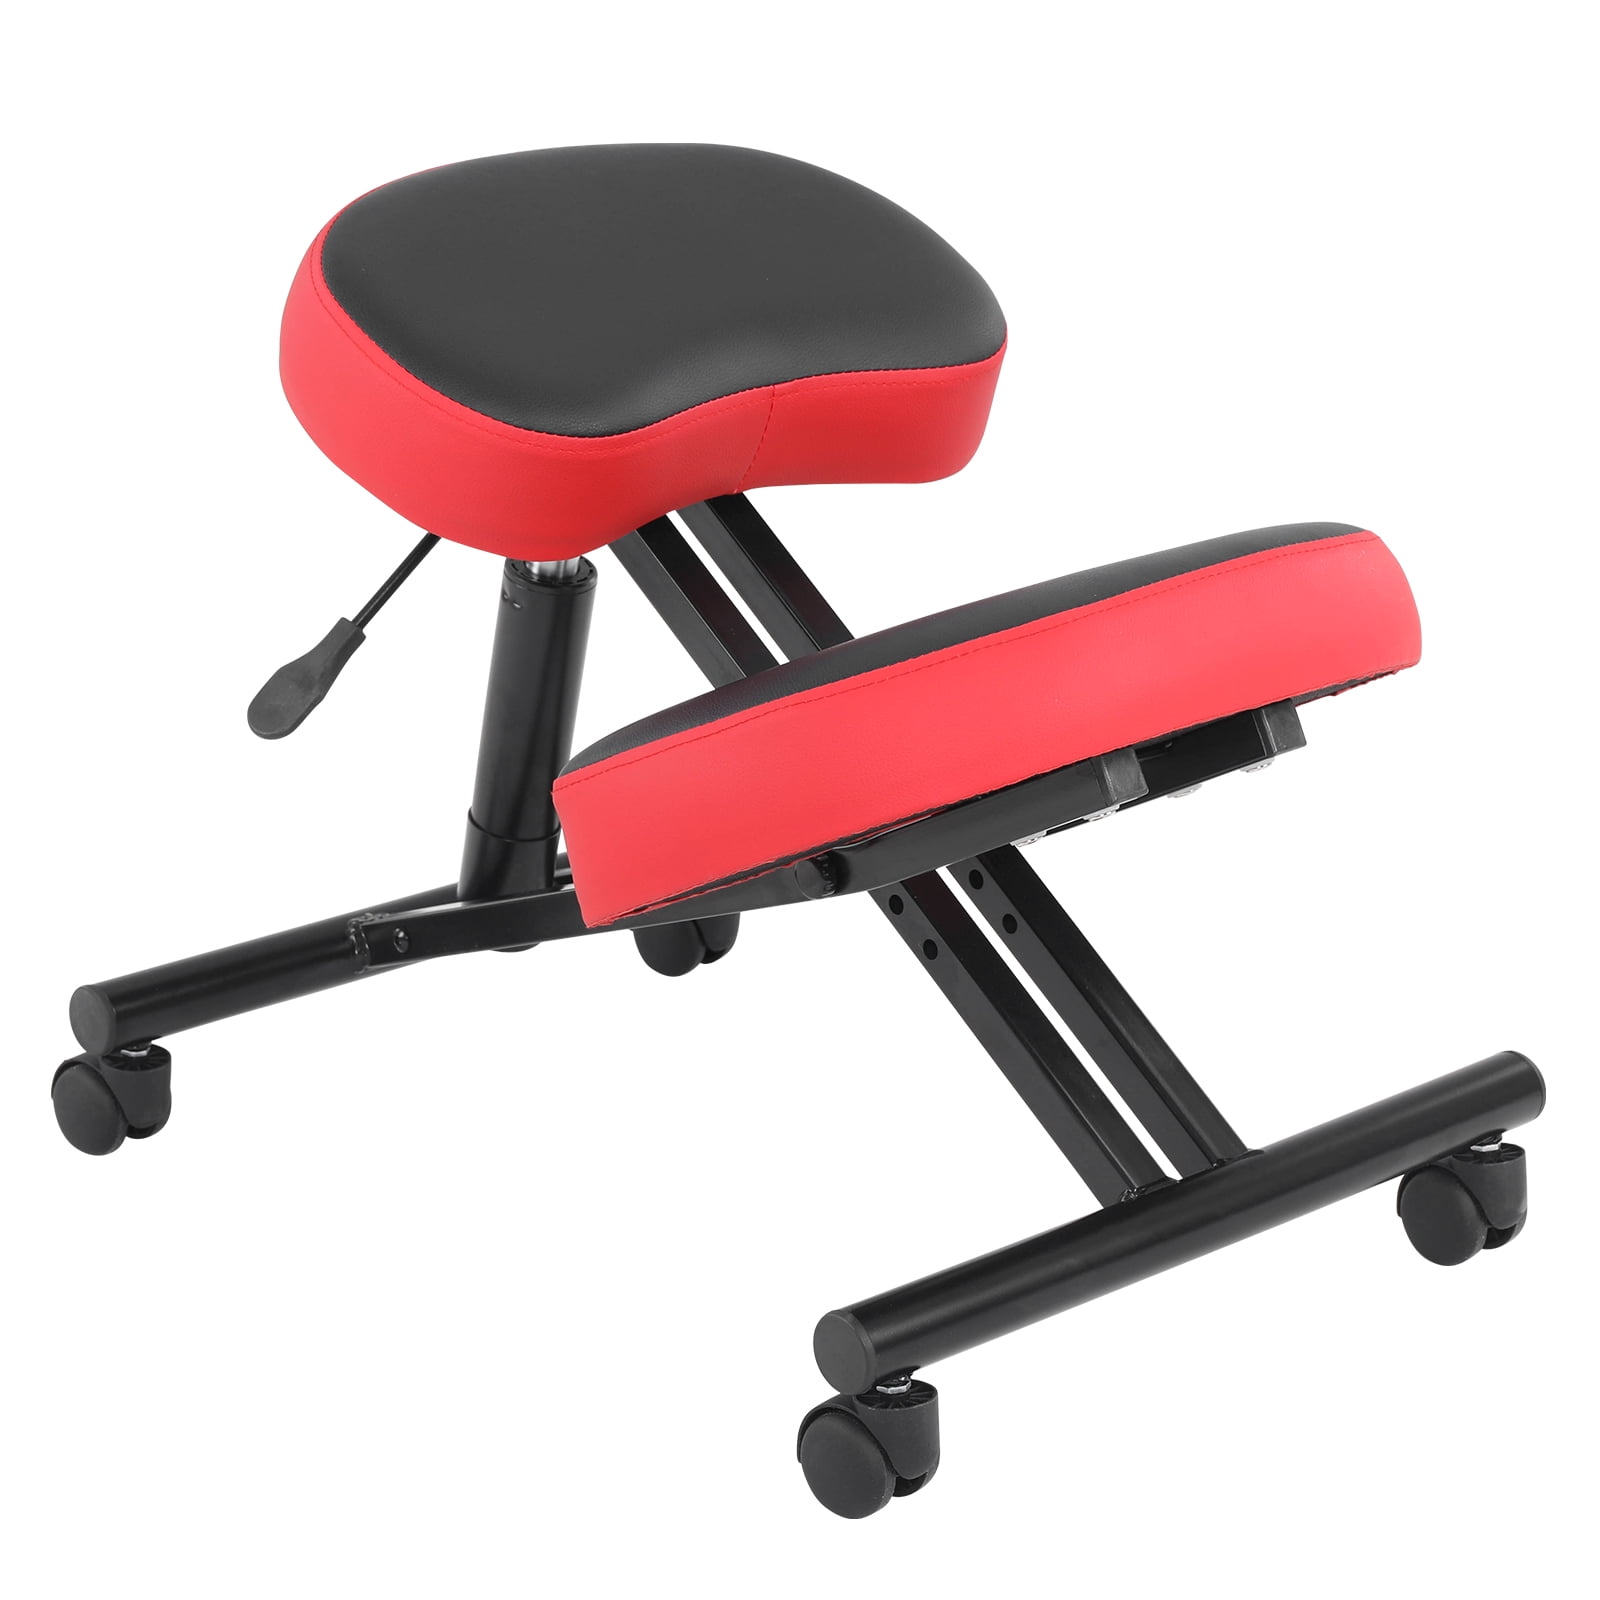 Ergonomic Kneeling Chair Home Office Orthopaedic Posture Chairs Height Adjustable Ergonomic Kneeling